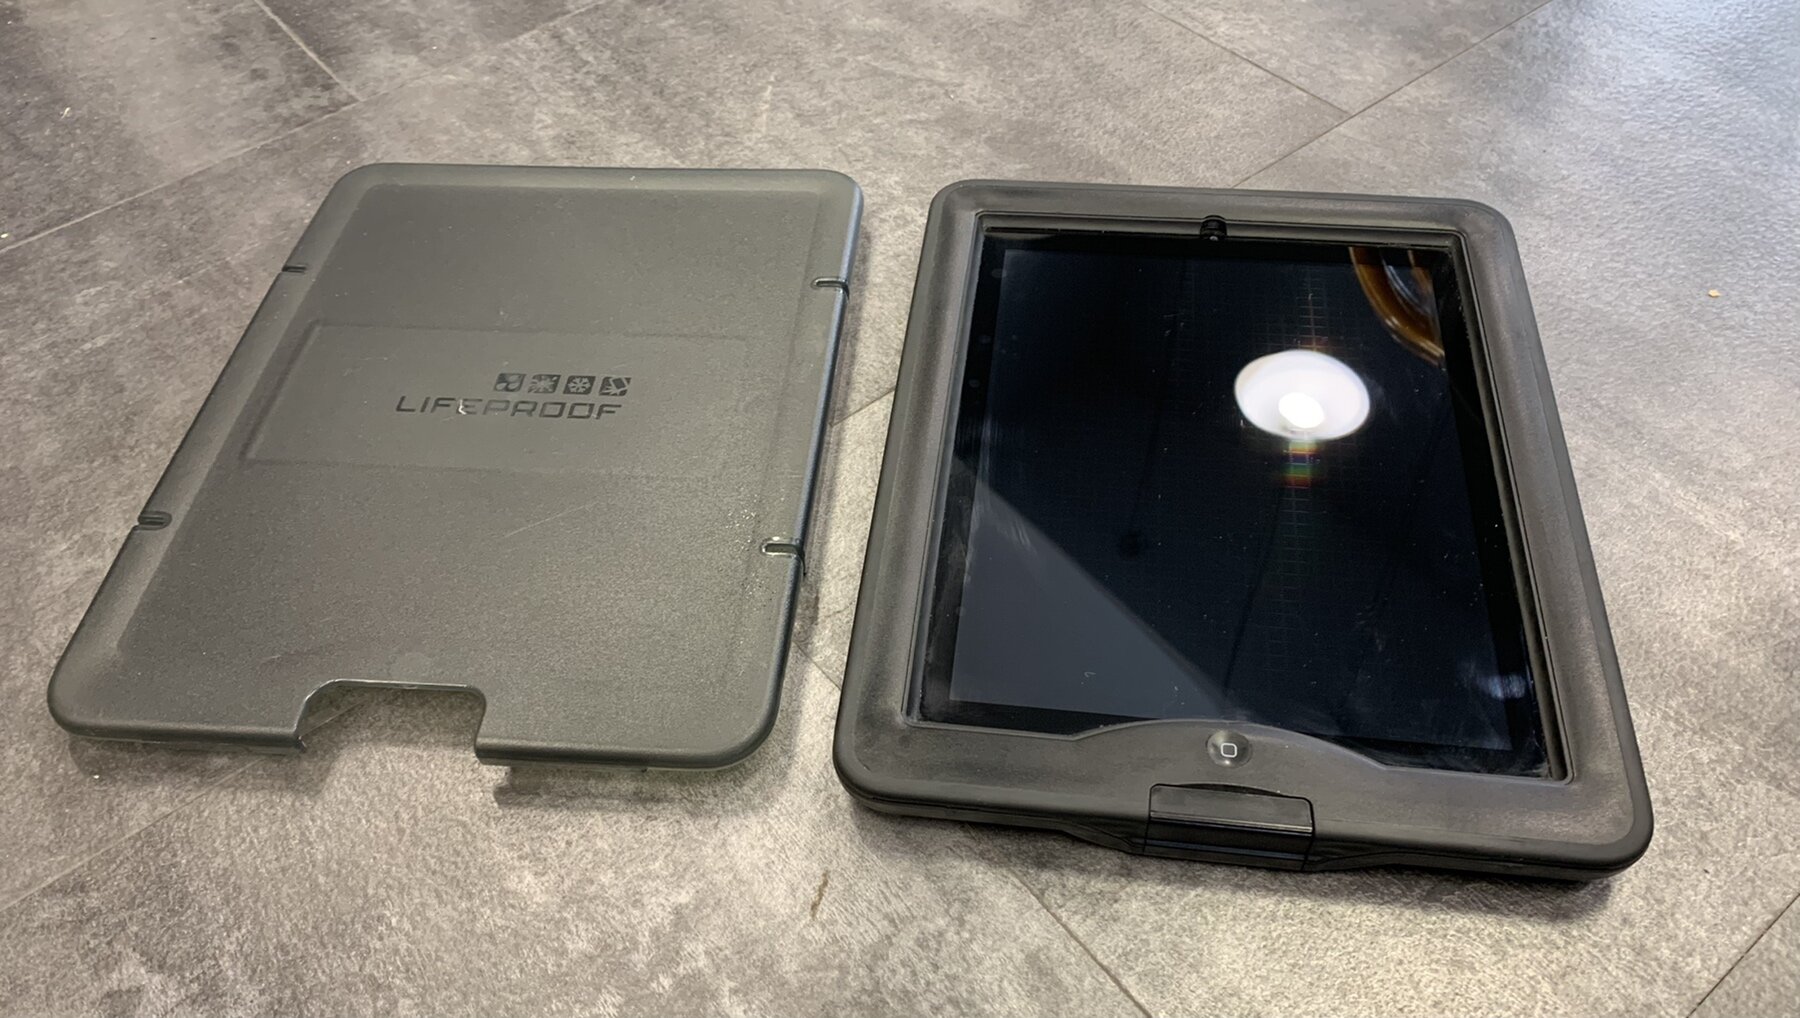 IPAD 4 WIFI + CELLULAR 16G και Lifeproof αδιαβροχη θηκη - iPad